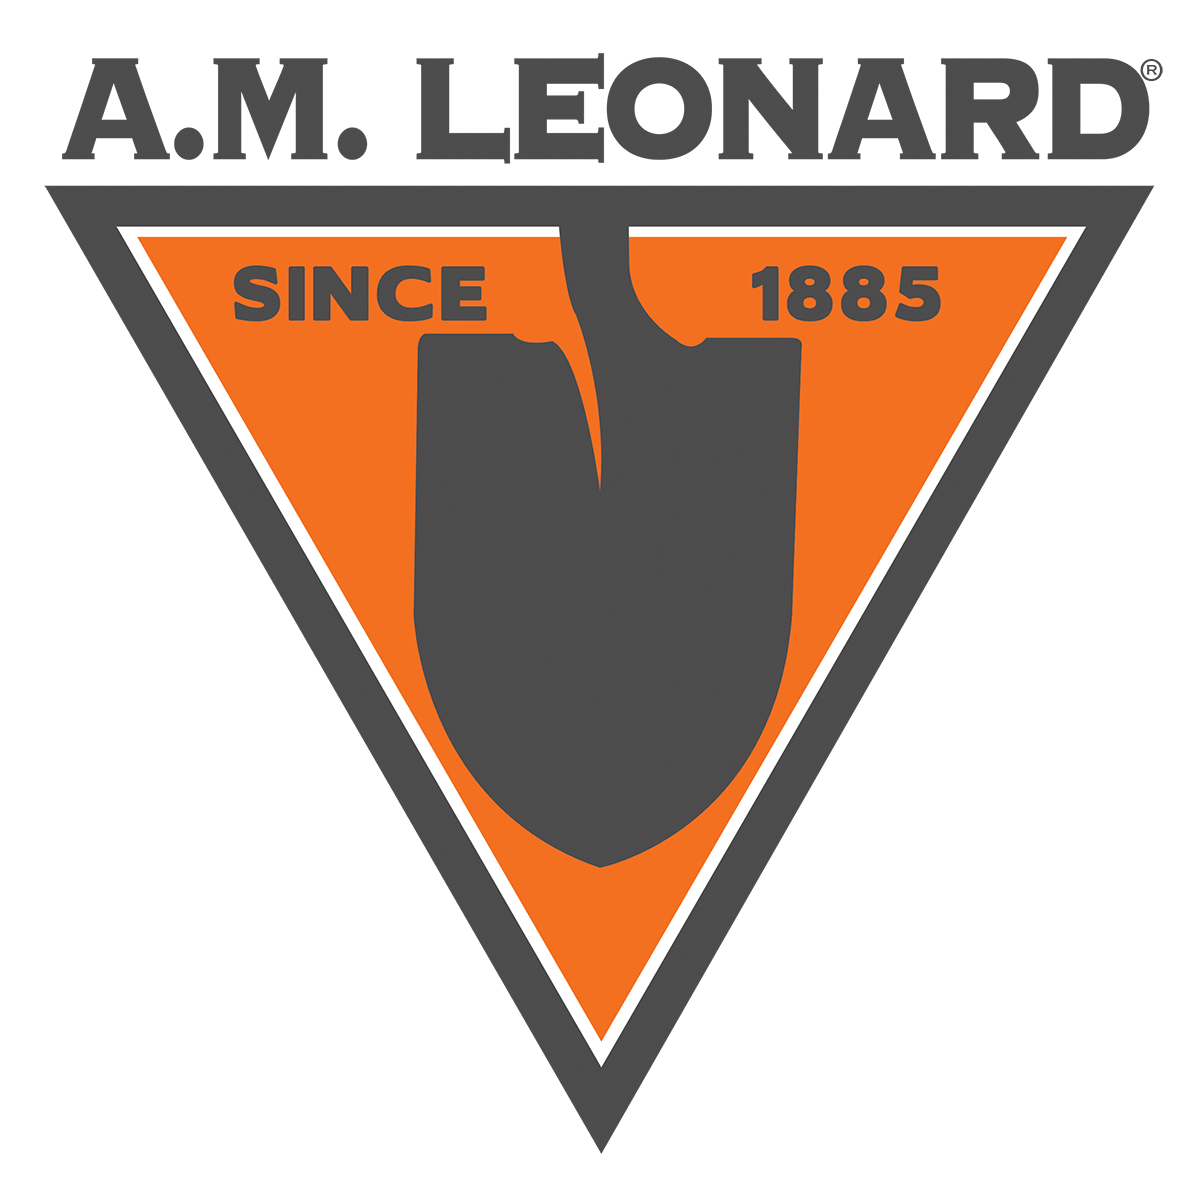 A.M. Leonard 